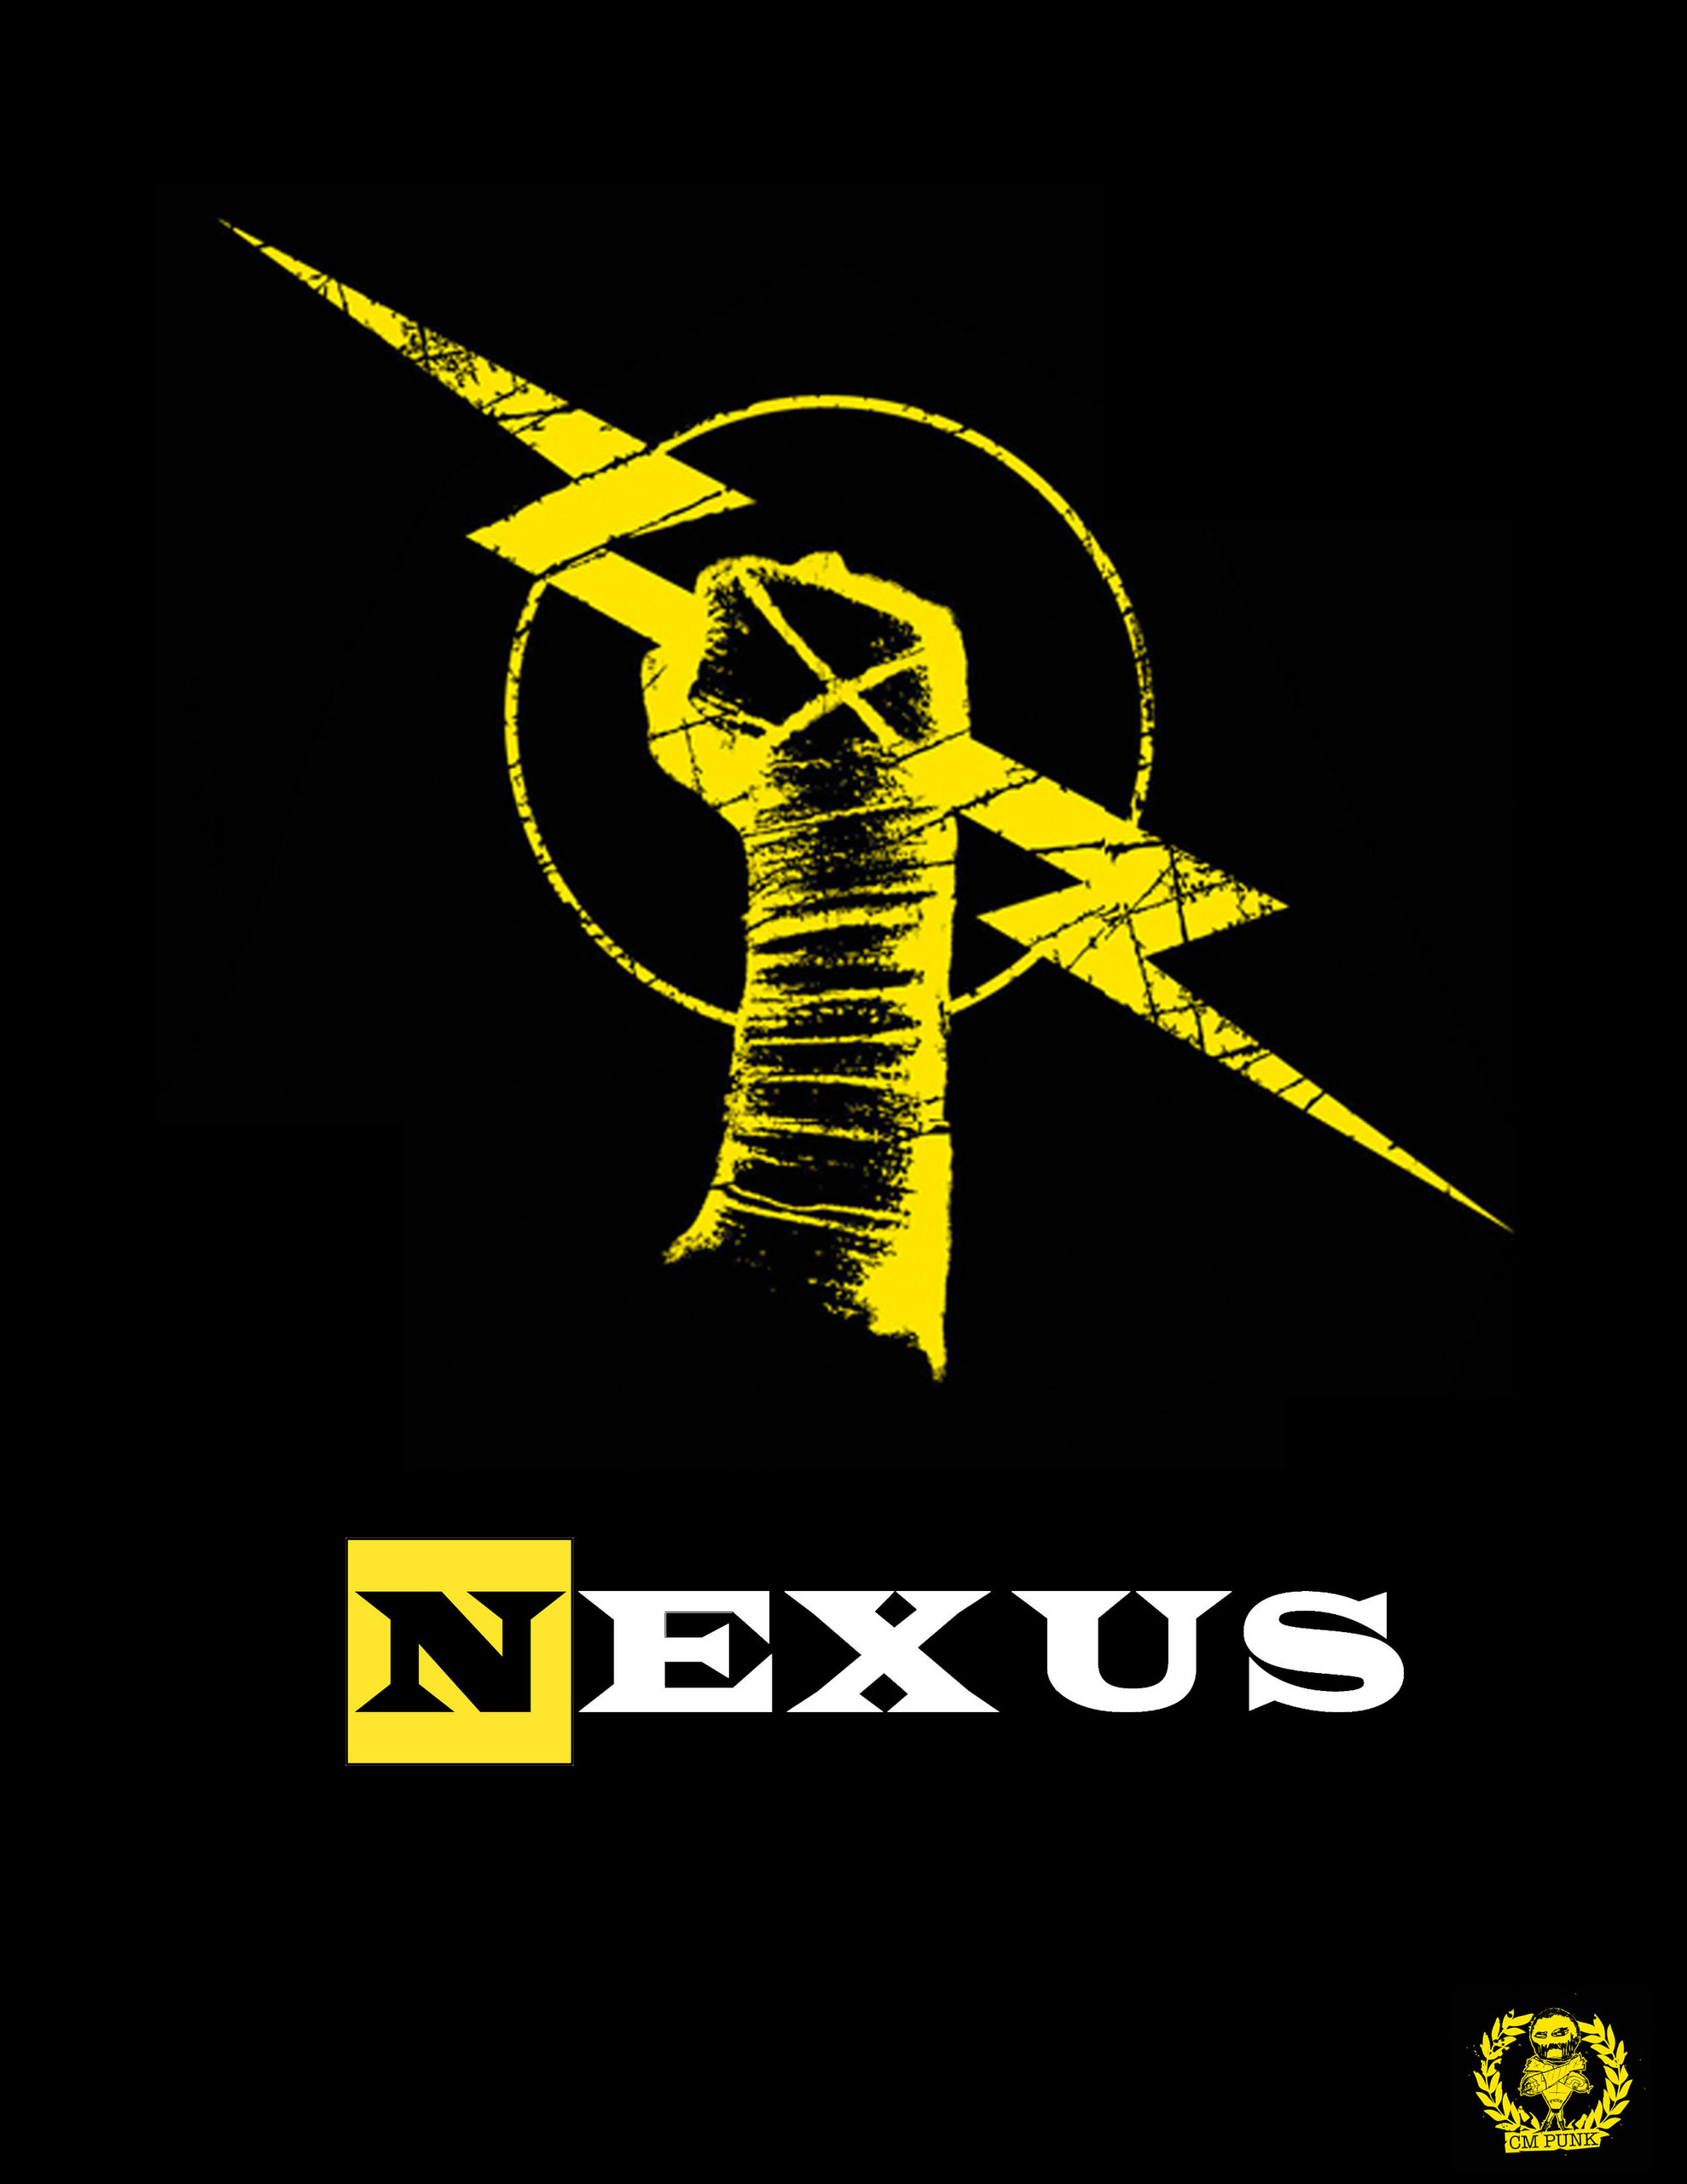 Wwe S The Nexus Image New Logo HD Wallpaper And